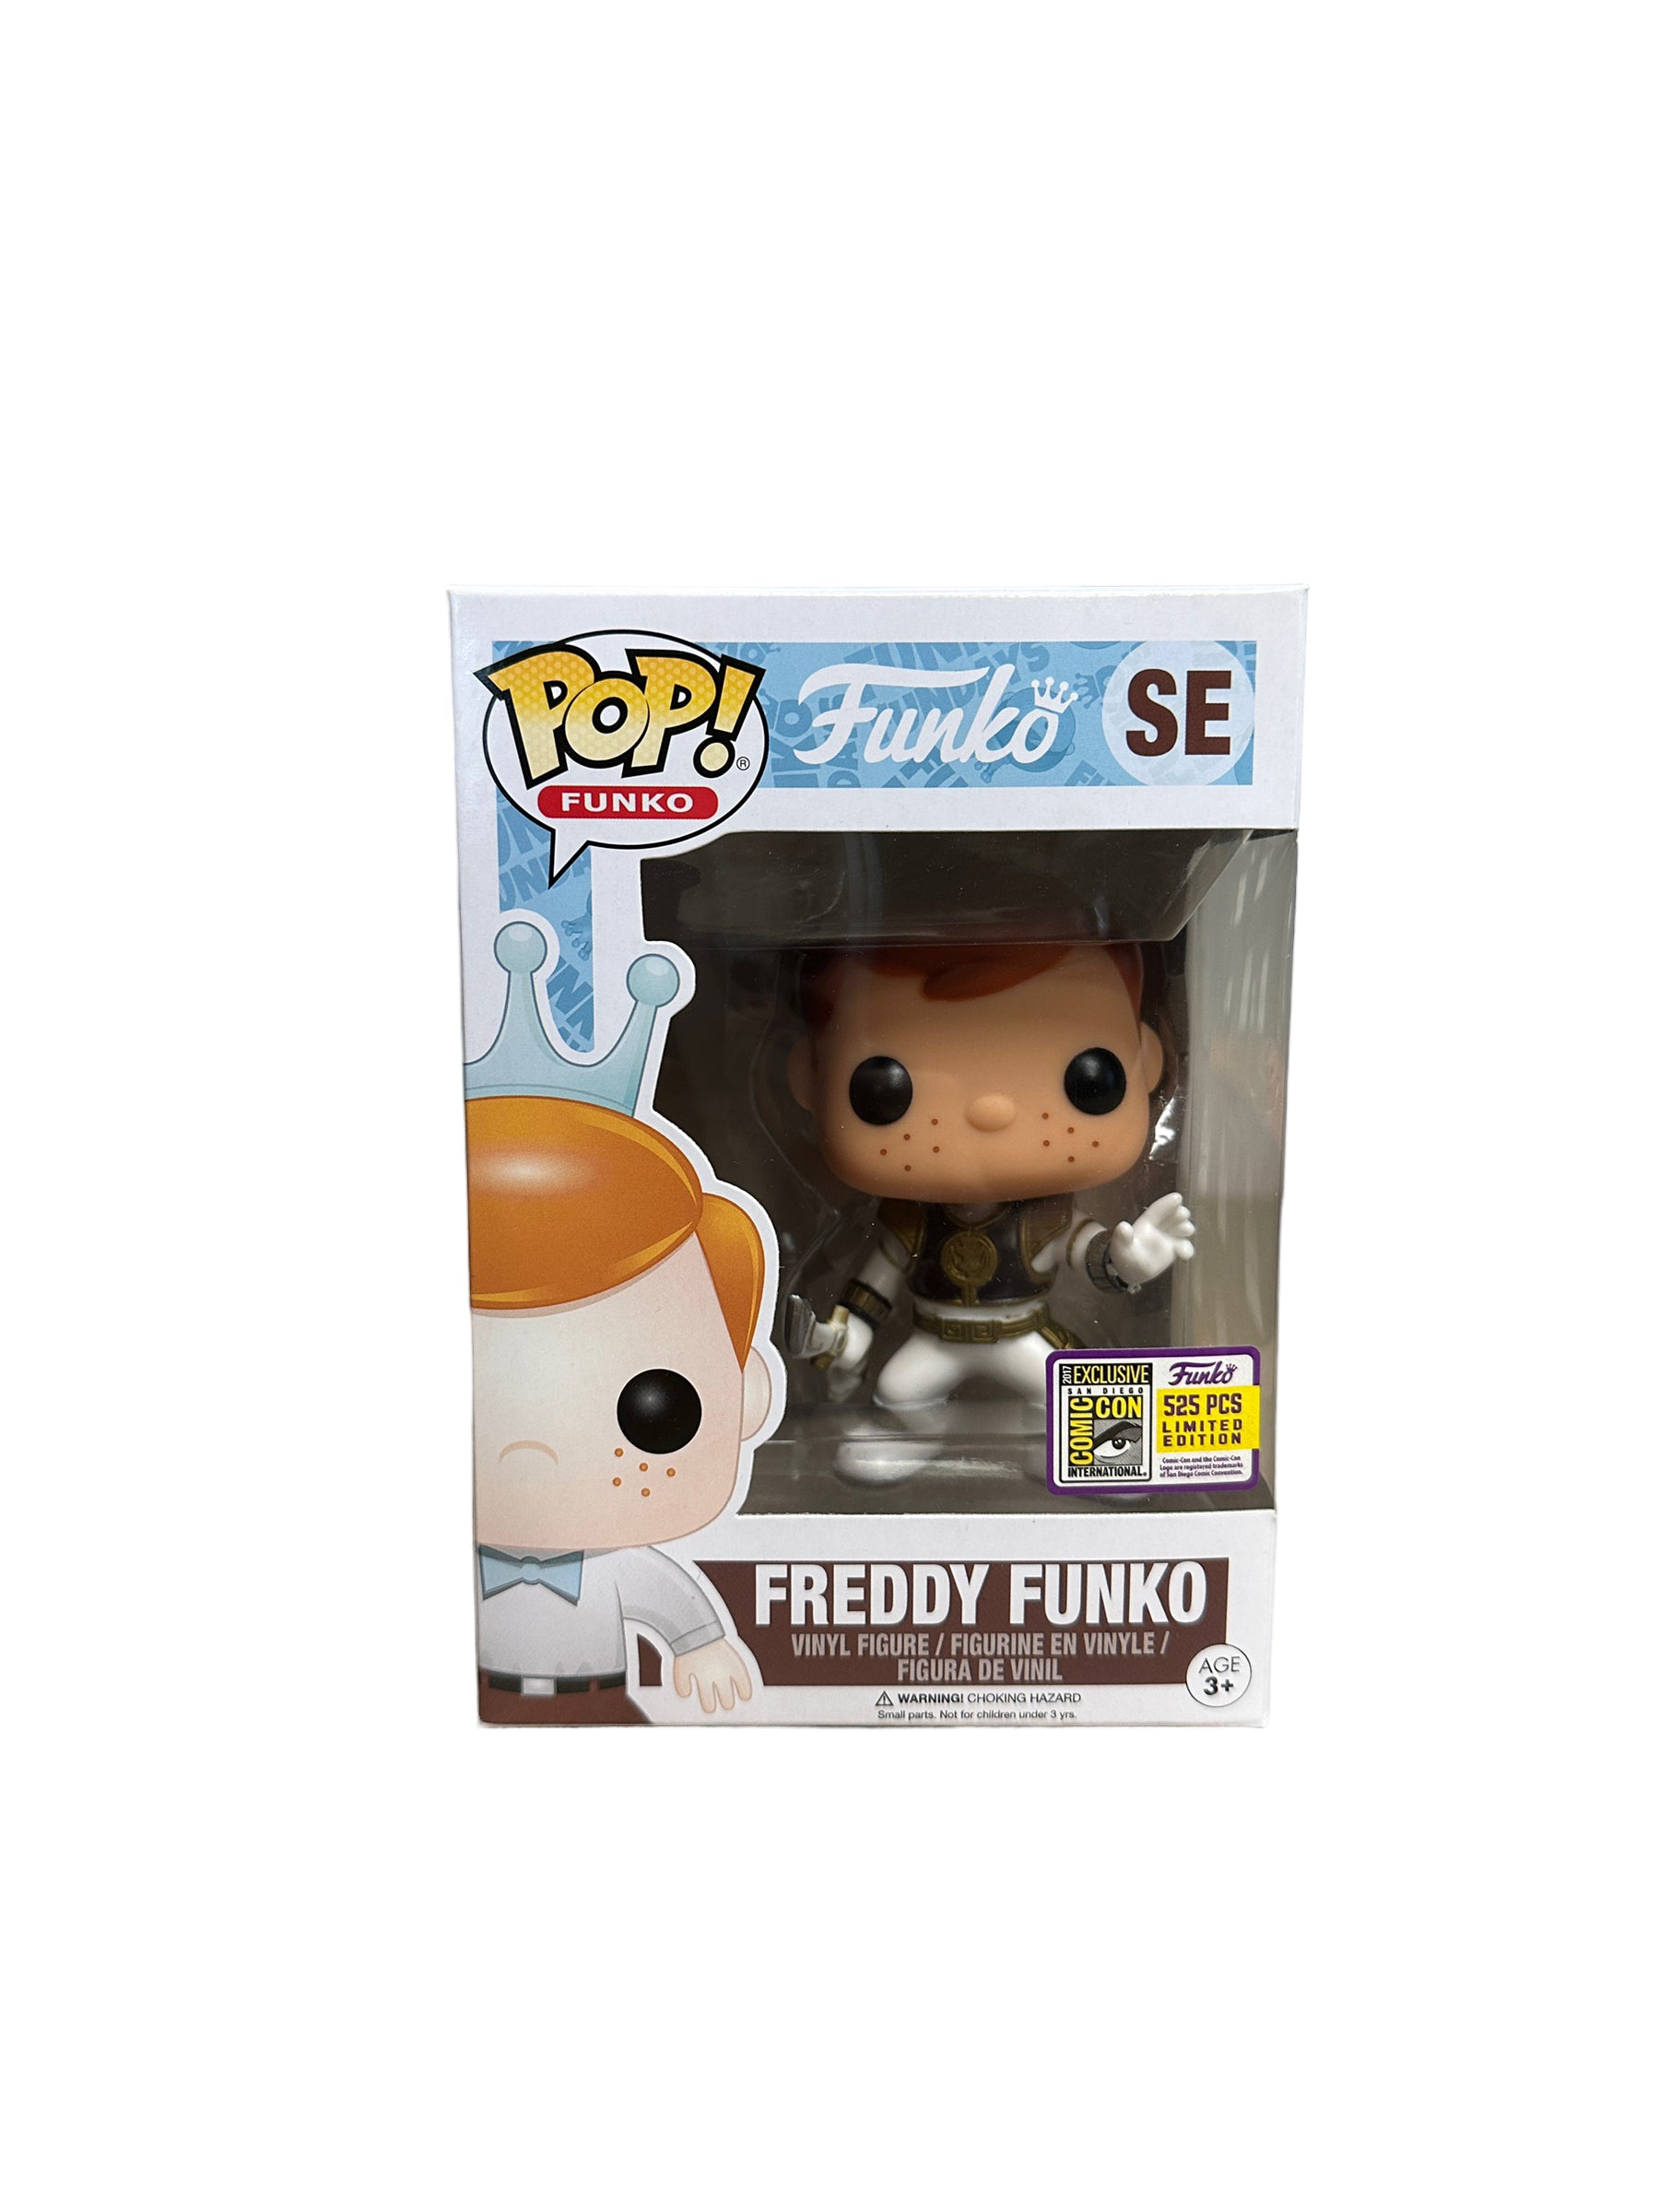 Freddy Funko as White Ranger Funko Pop! - SDCC 2017 Exclusive LE525 Pcs - Condition 9.25/10